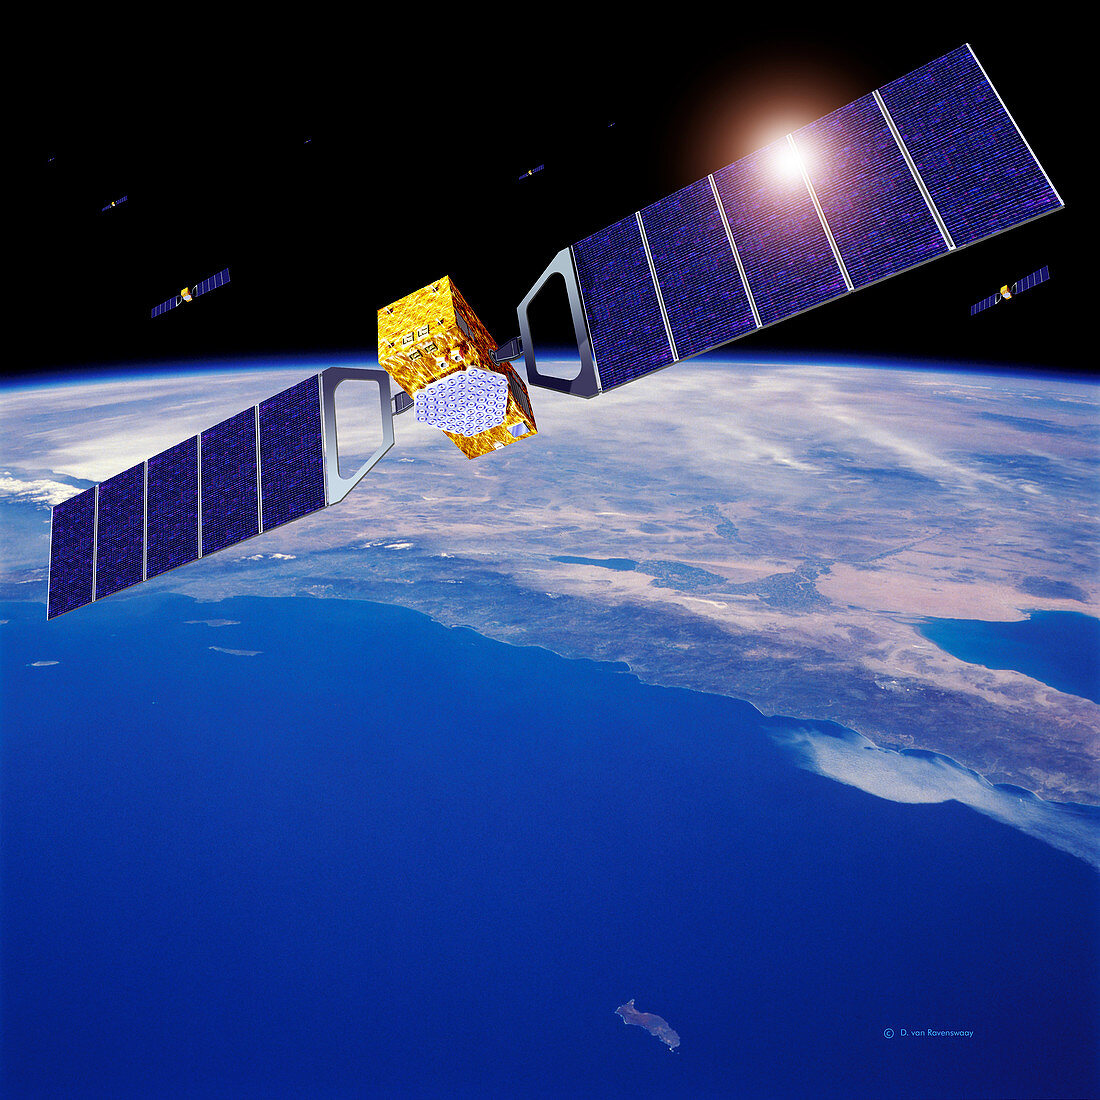 Galileo navigation satellites